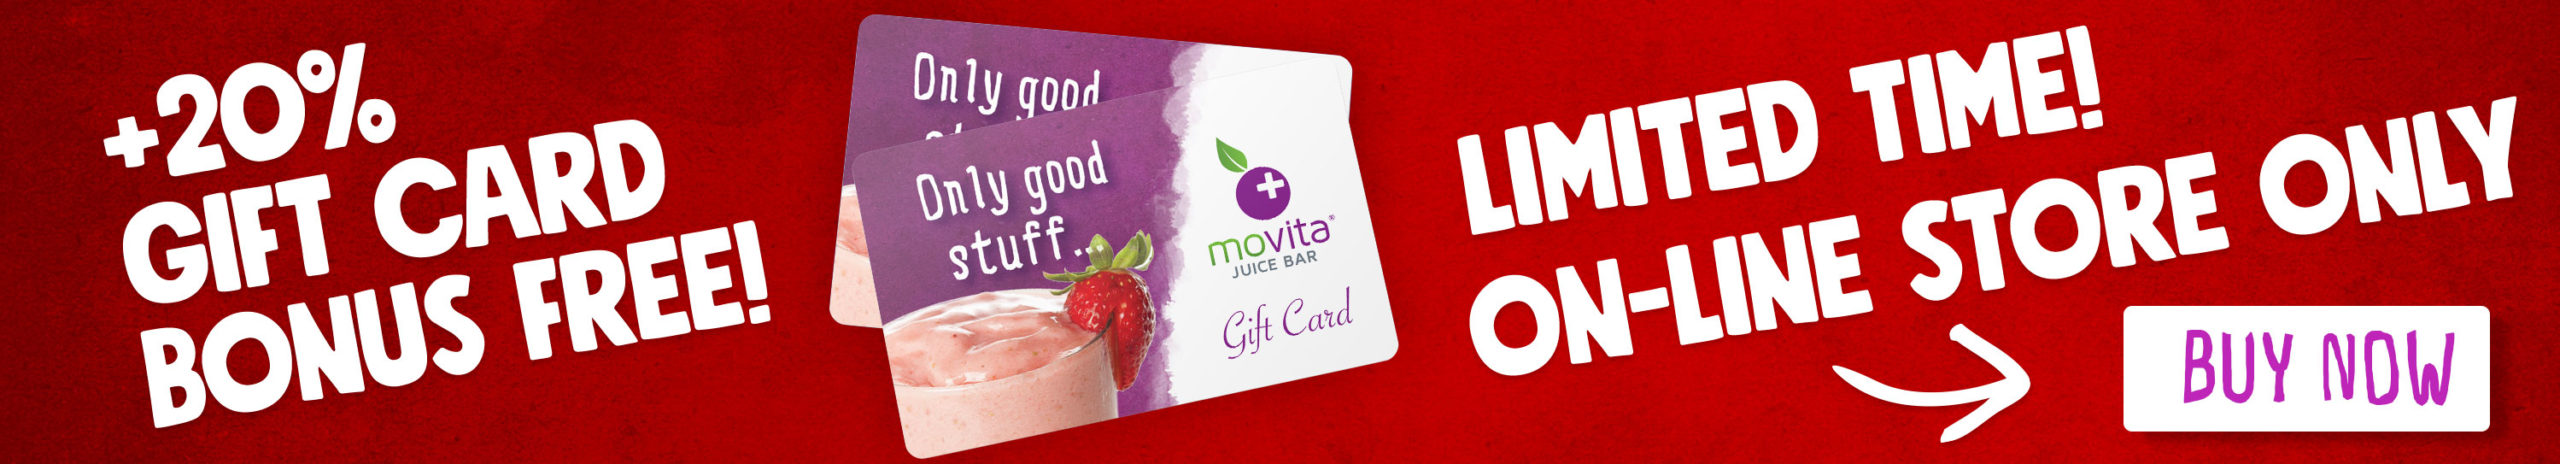 Movita Gift Card 20% Free Value Bonus online only!